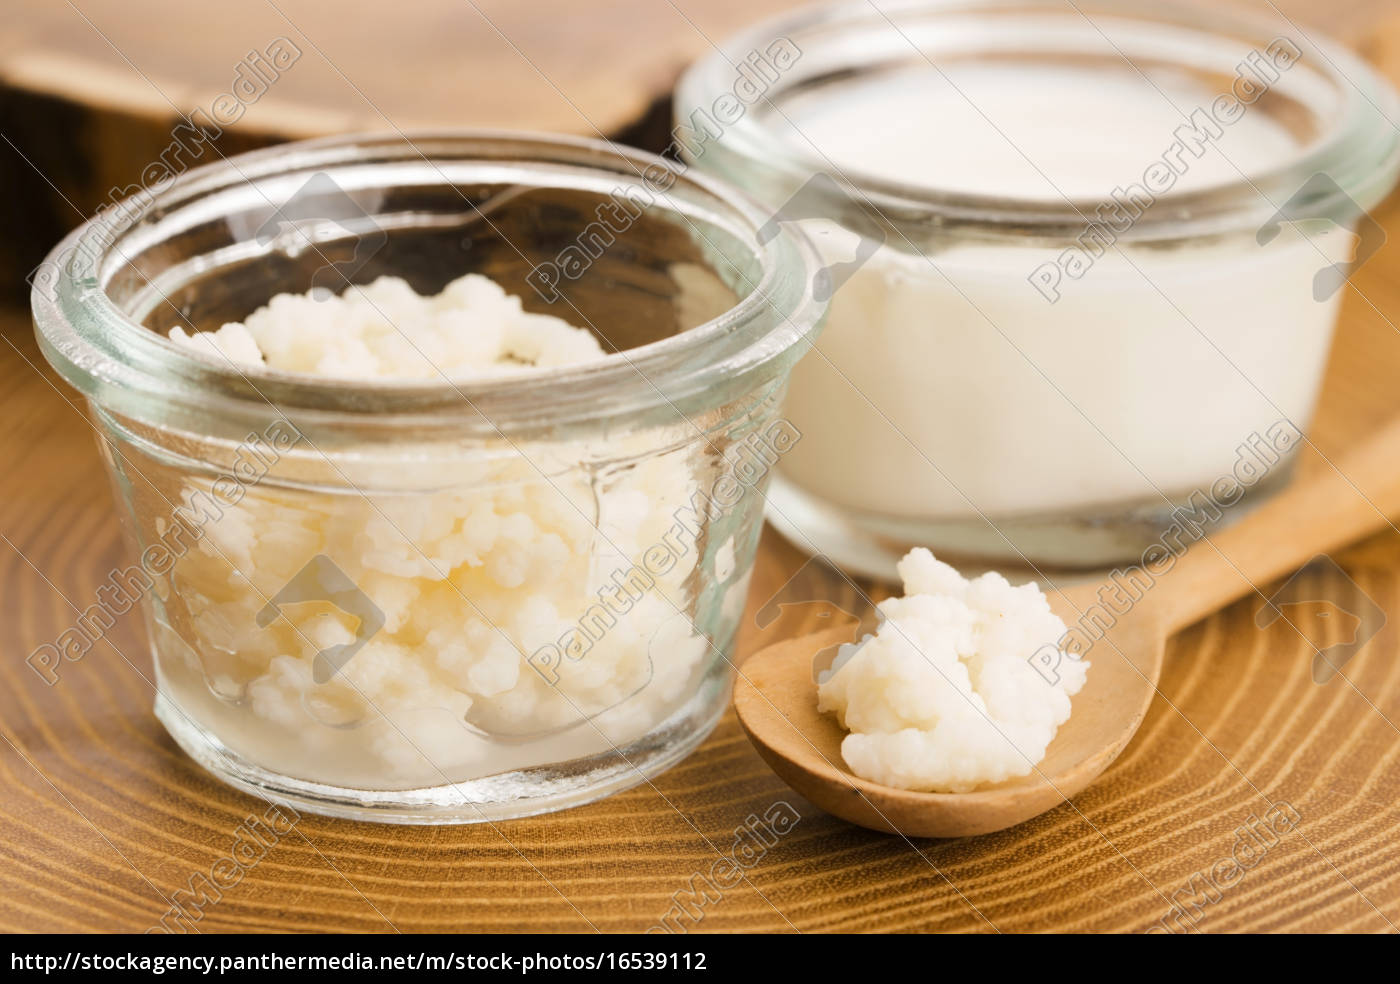 Grani di kefir di latte probiotici biologici - Stockphoto #16539112